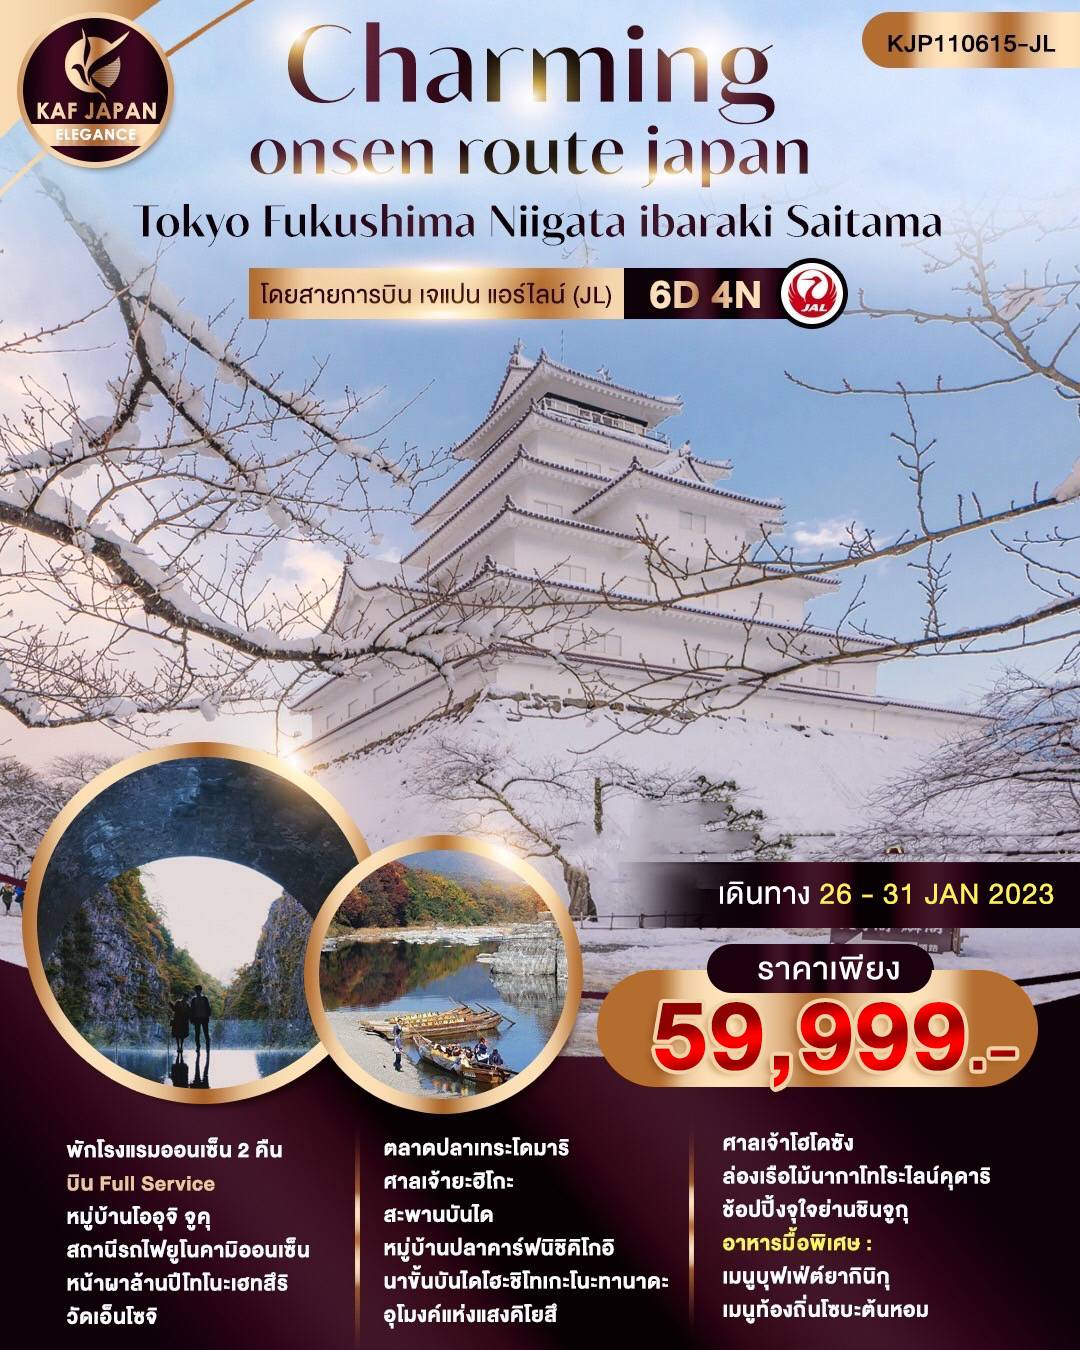 Charming Onsen route japan Tokyo Fukushima Niigata ibaraki Saitama 6 D 4 N